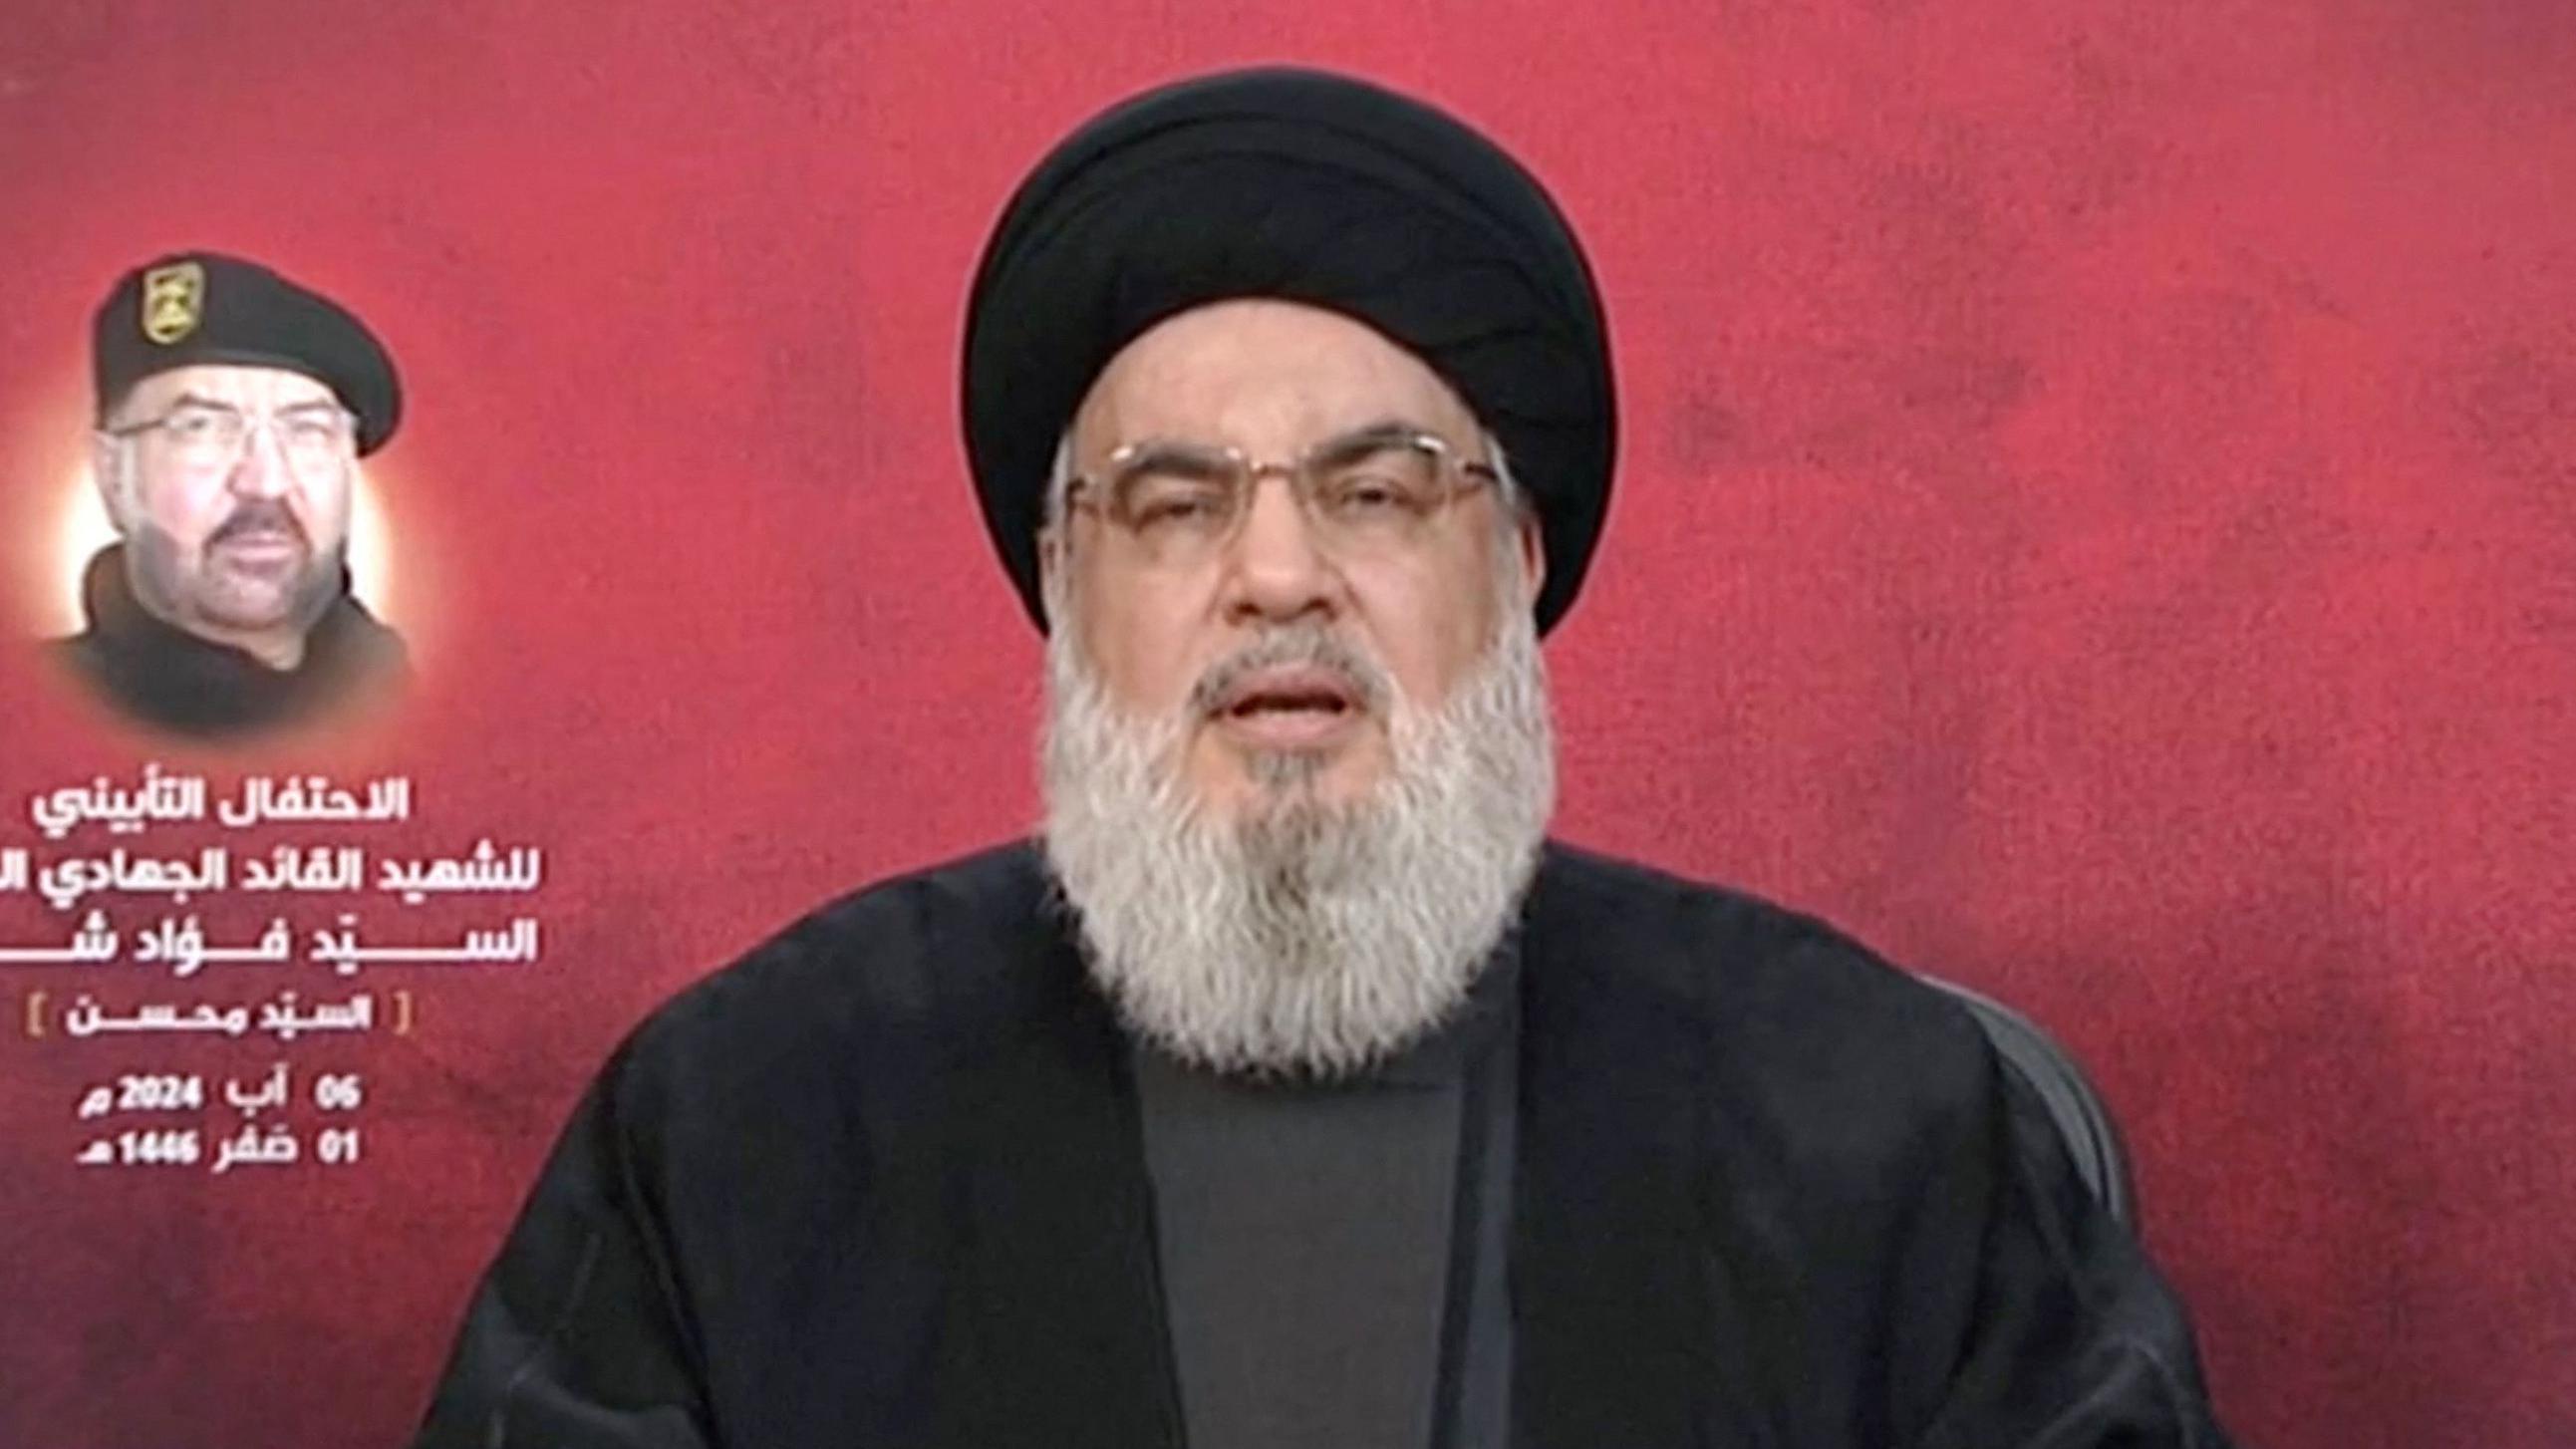 Hezbollah vows retaliation for killing of commander